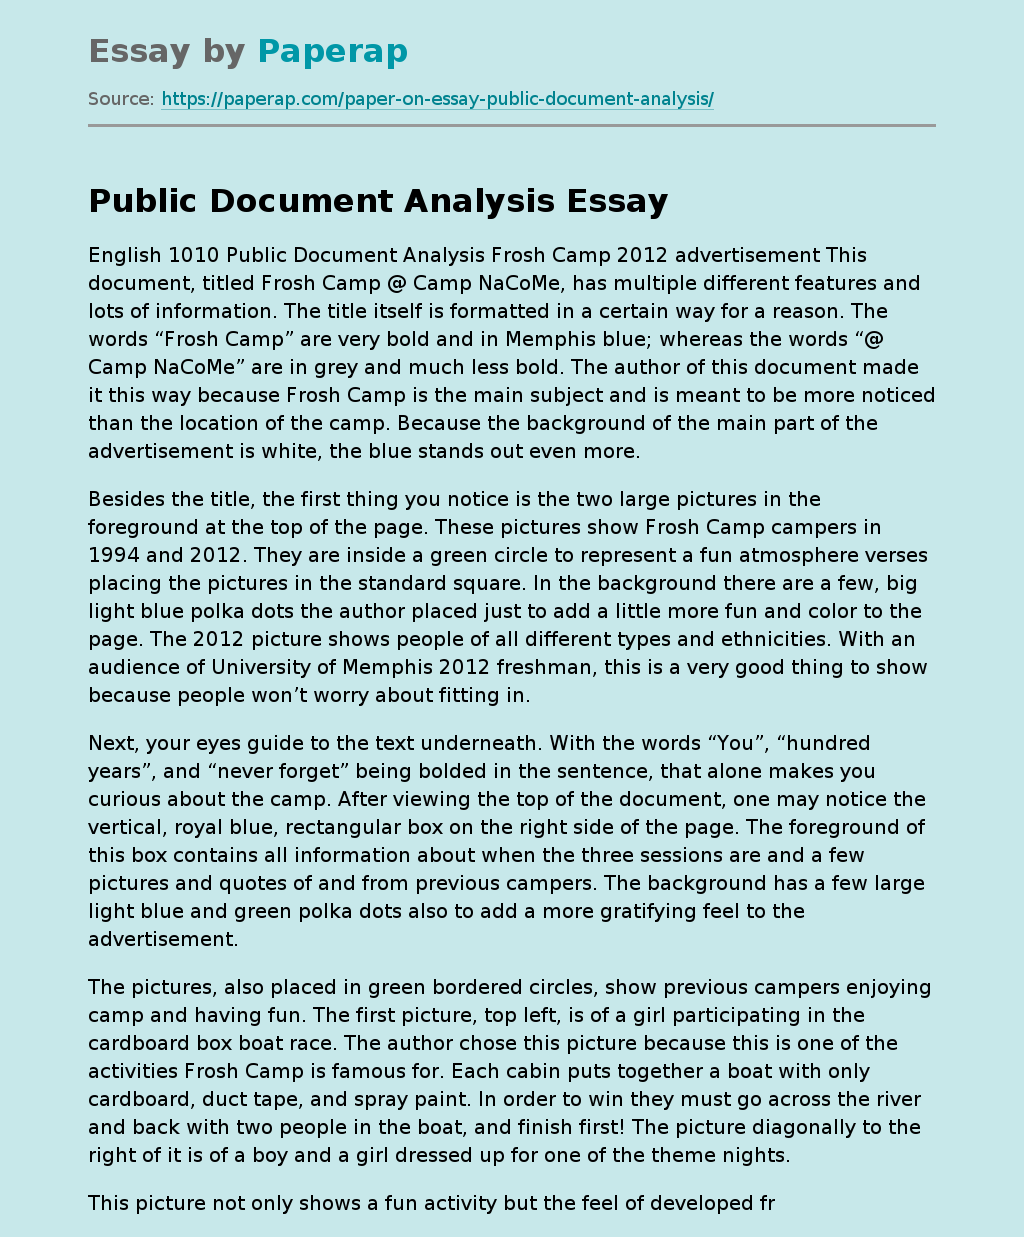 The Public Document Analysis